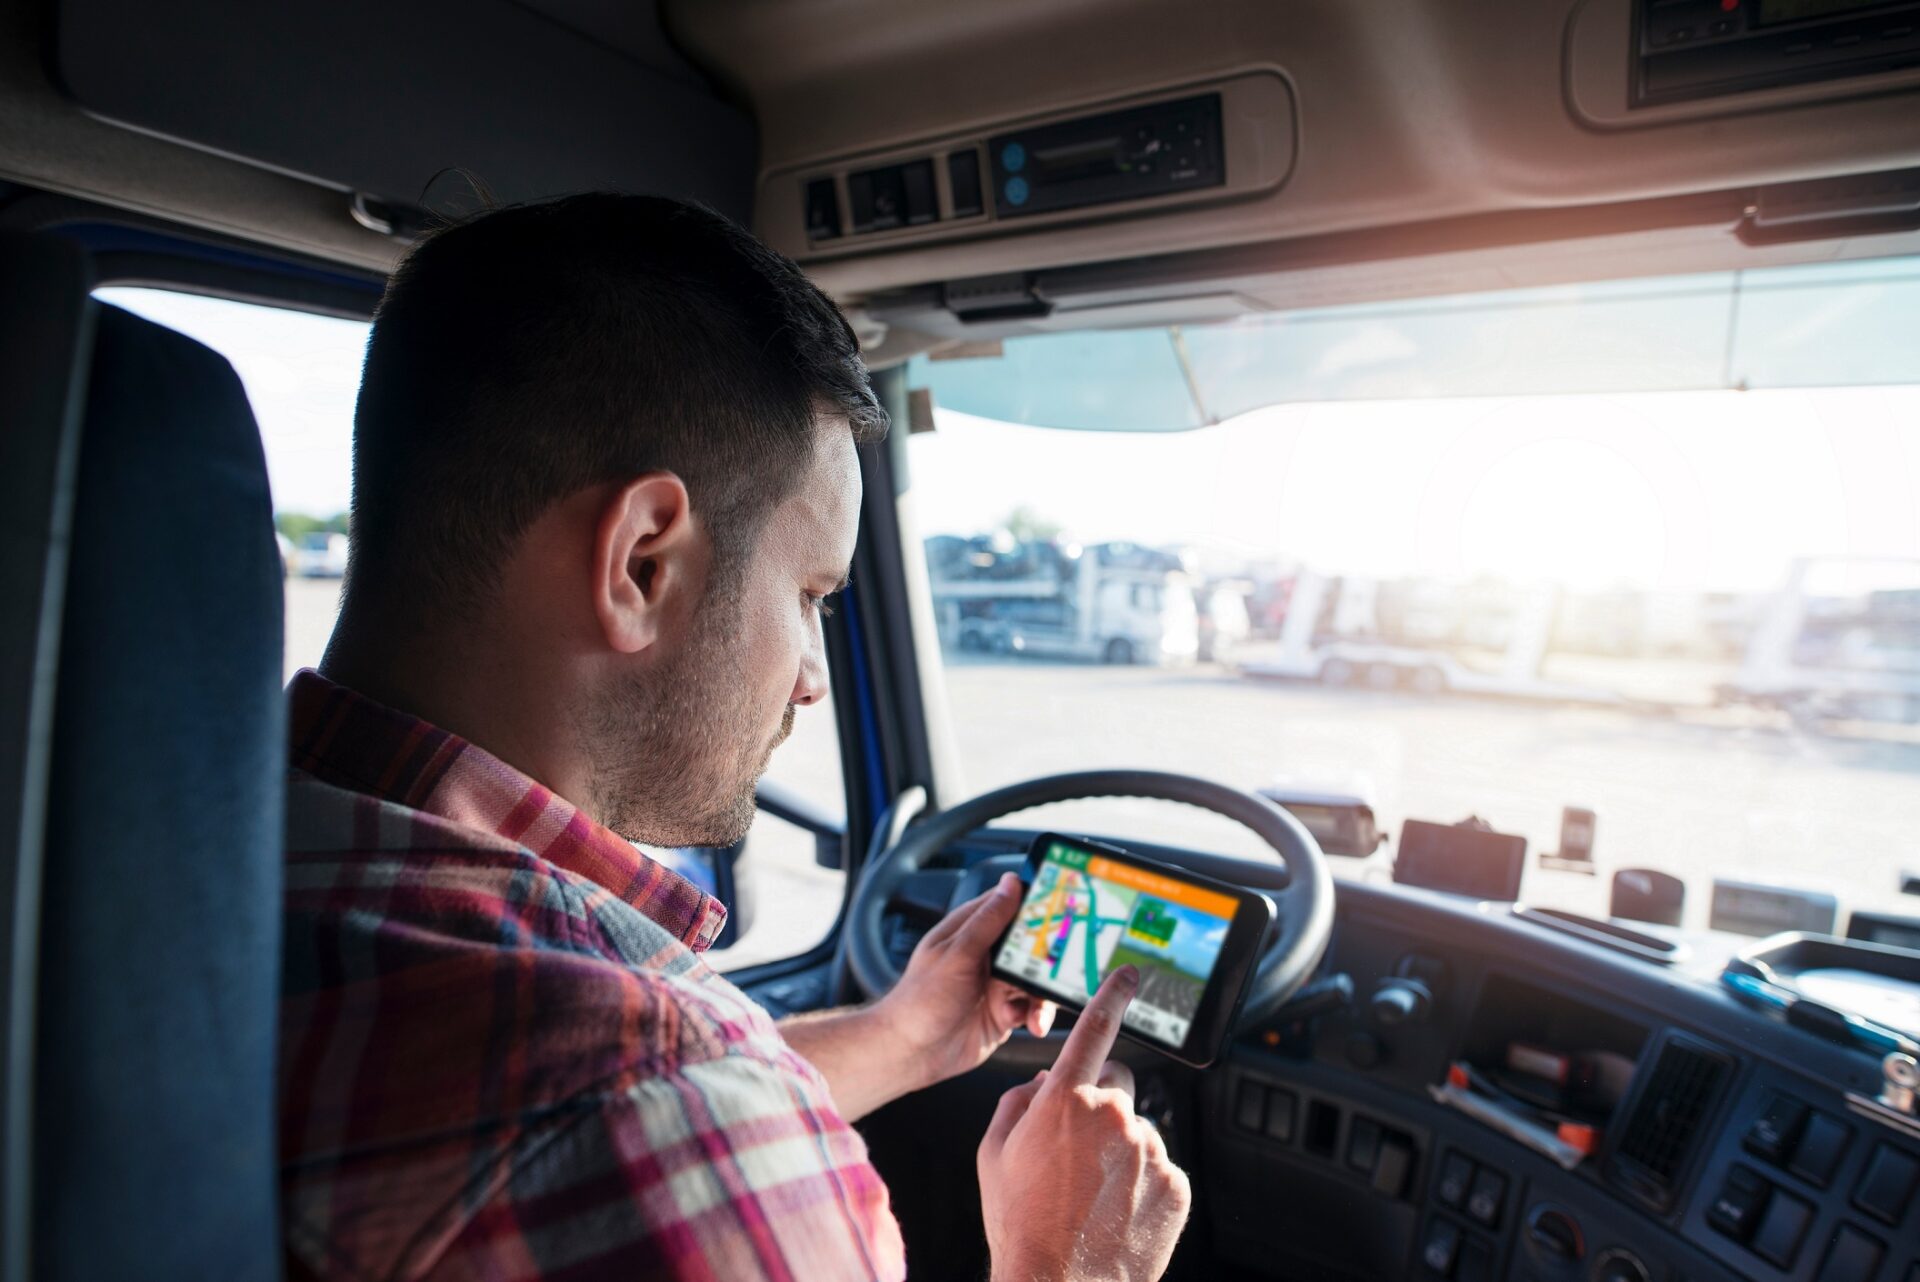 owner operator using GPS inside cab